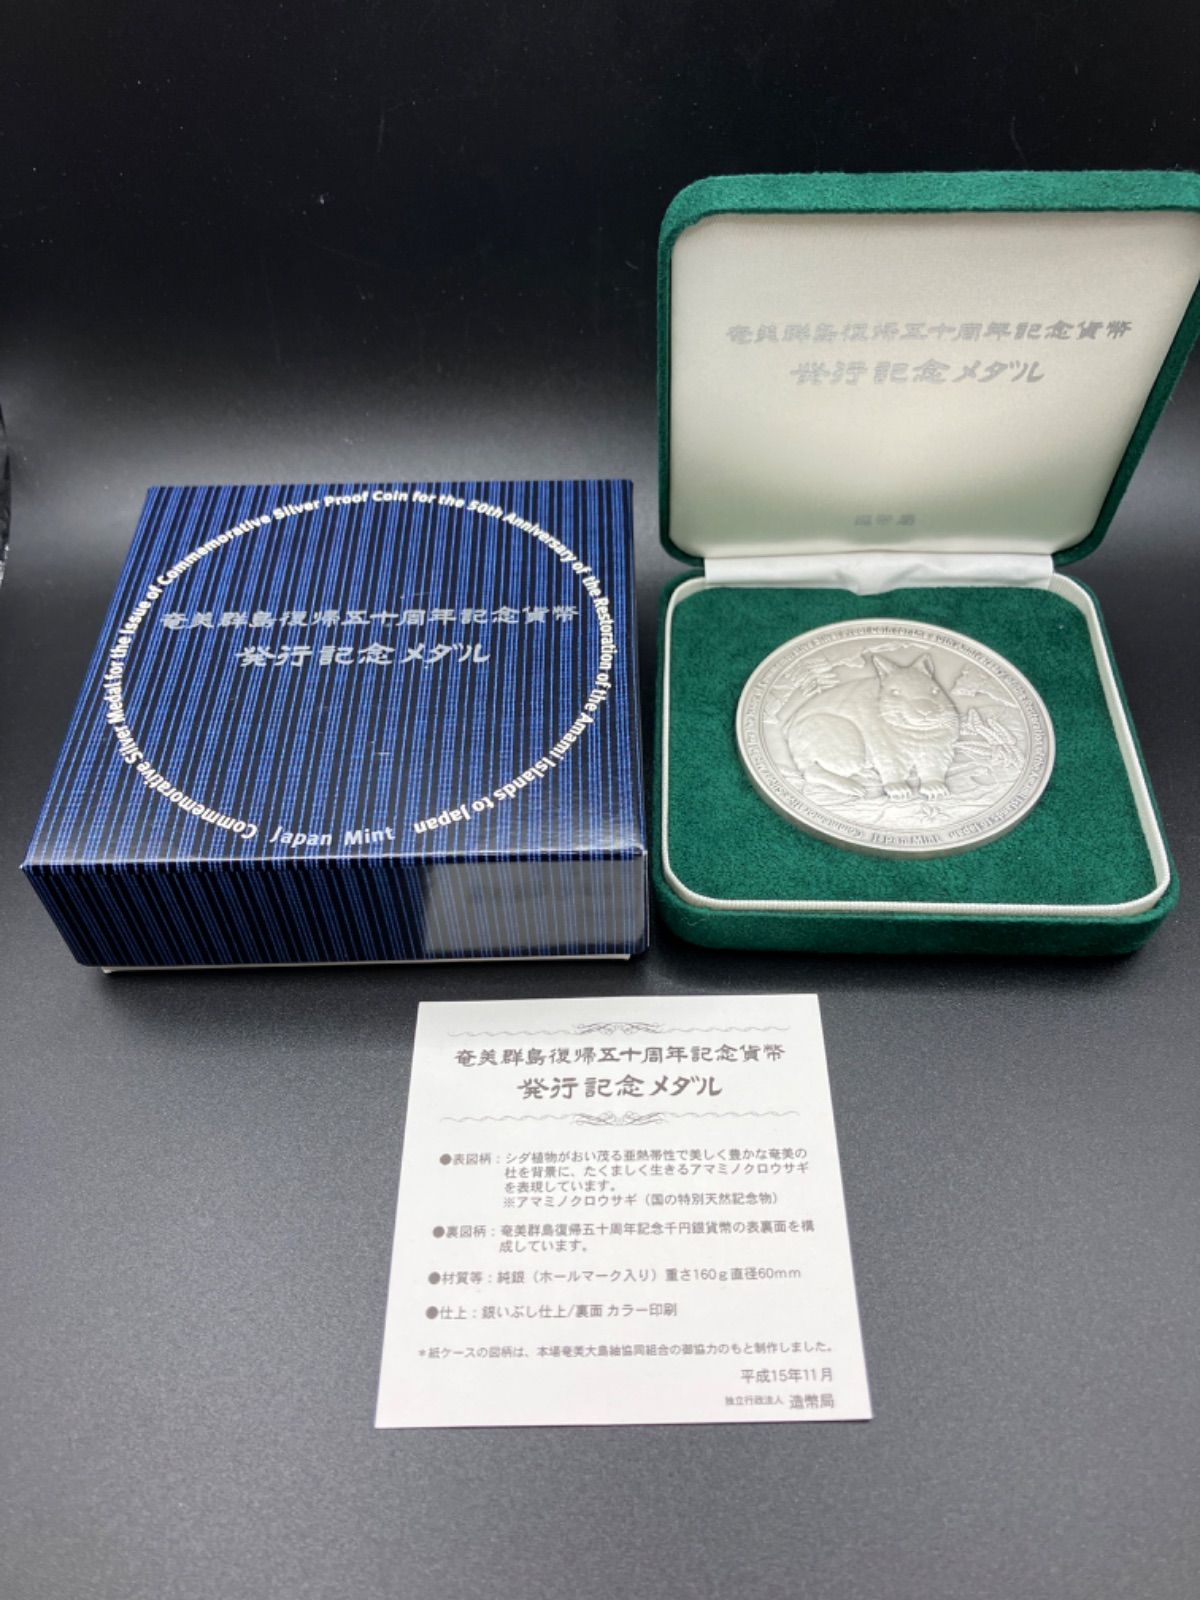 奄美群島復帰50周年記念貨幣発行記念メダル重量160g - www ...